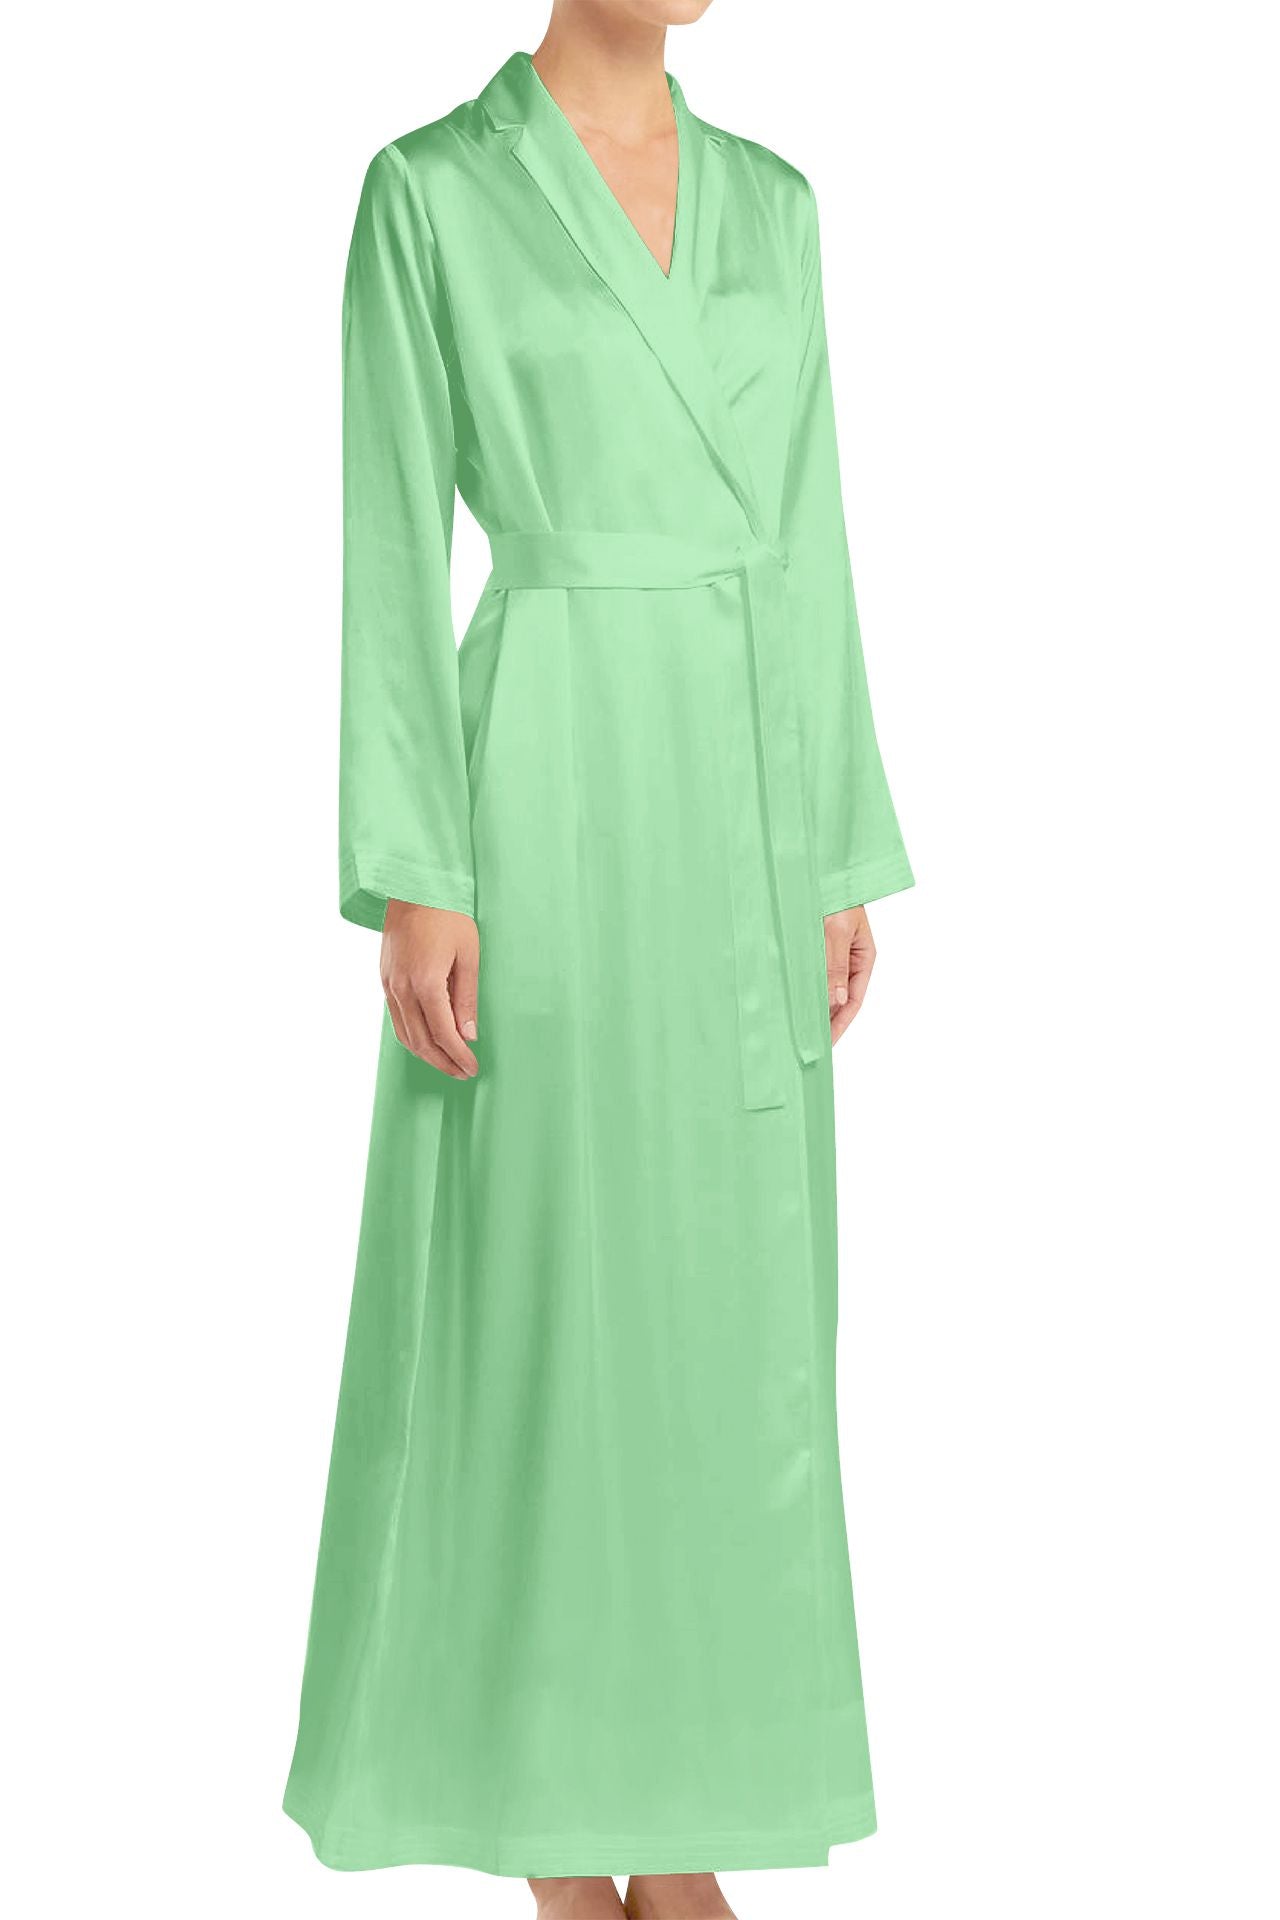 "green long sleeve wrap dress" "wrap dress maxi long sleeve" "Kyle X Shahida" "green wrap maxi dress"